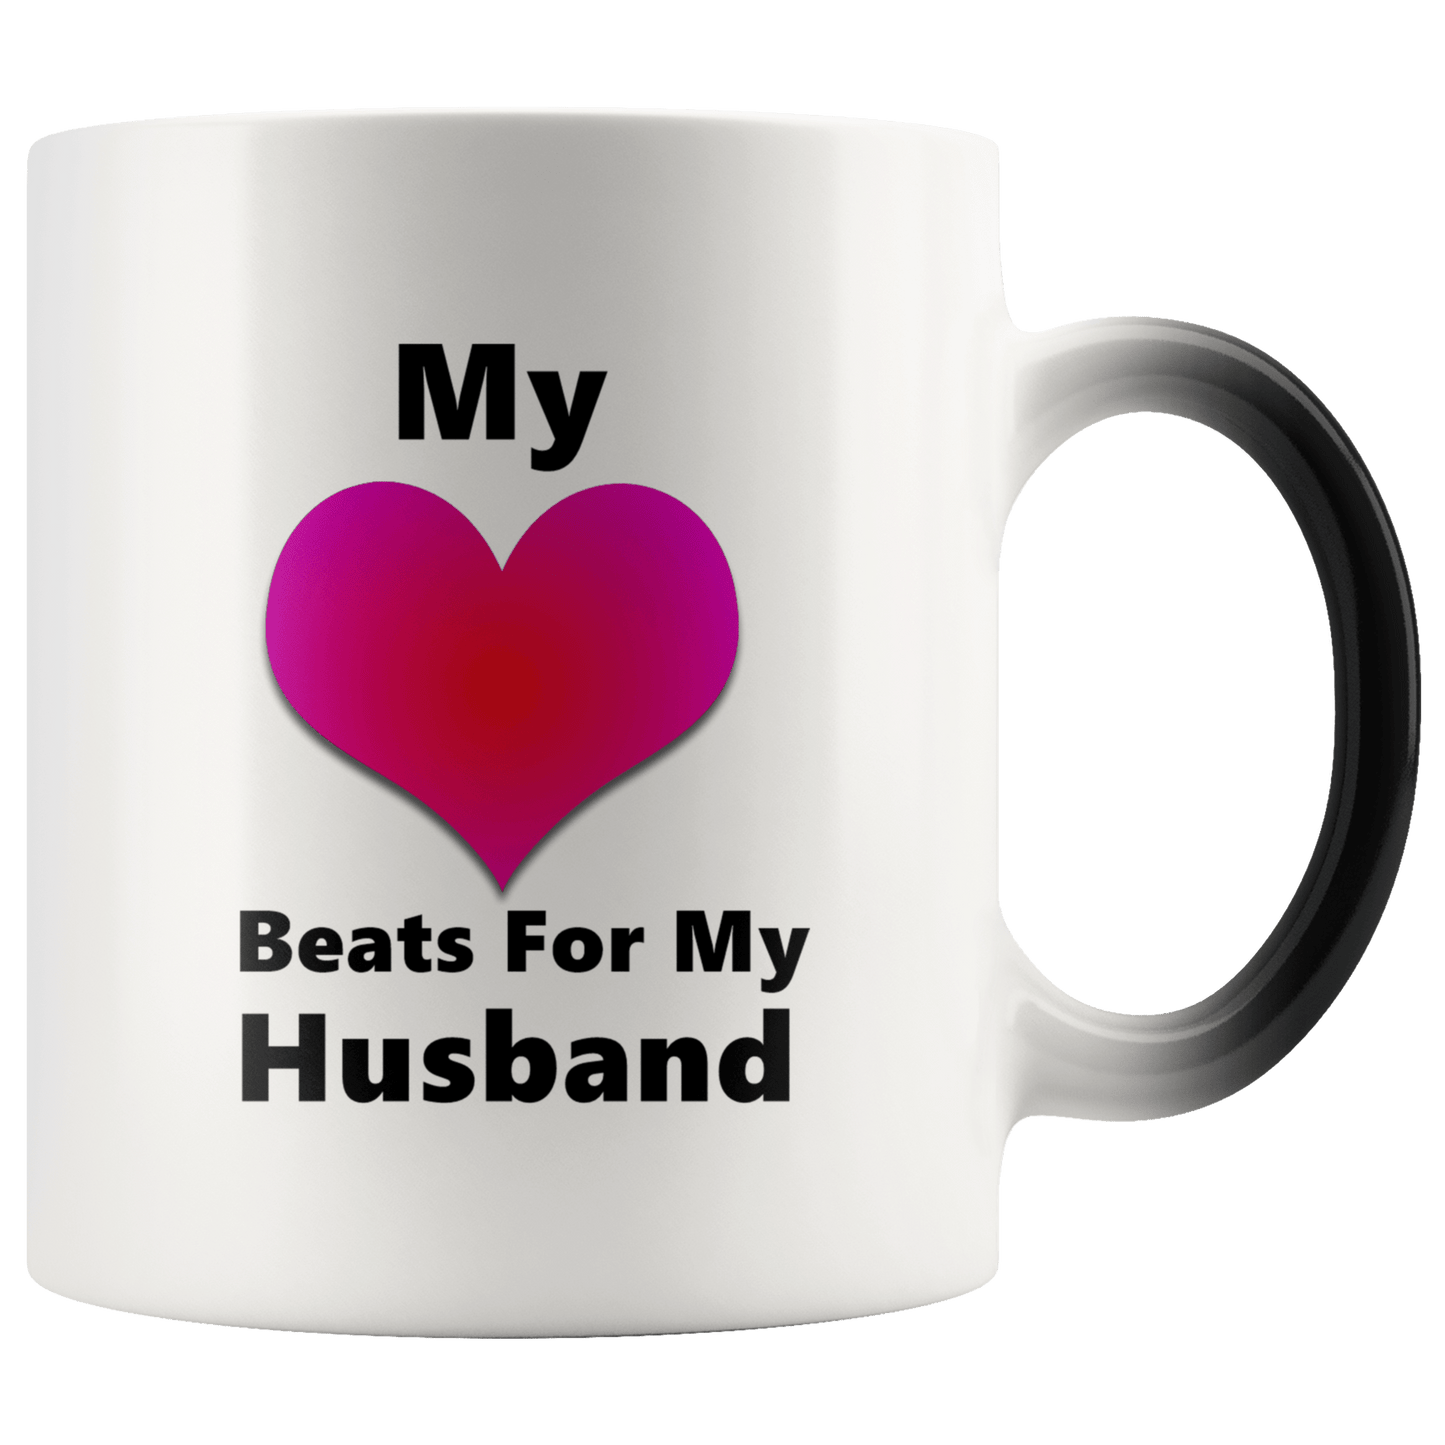 Husband and Wife Magic Mug Set - Omtheo Gifts